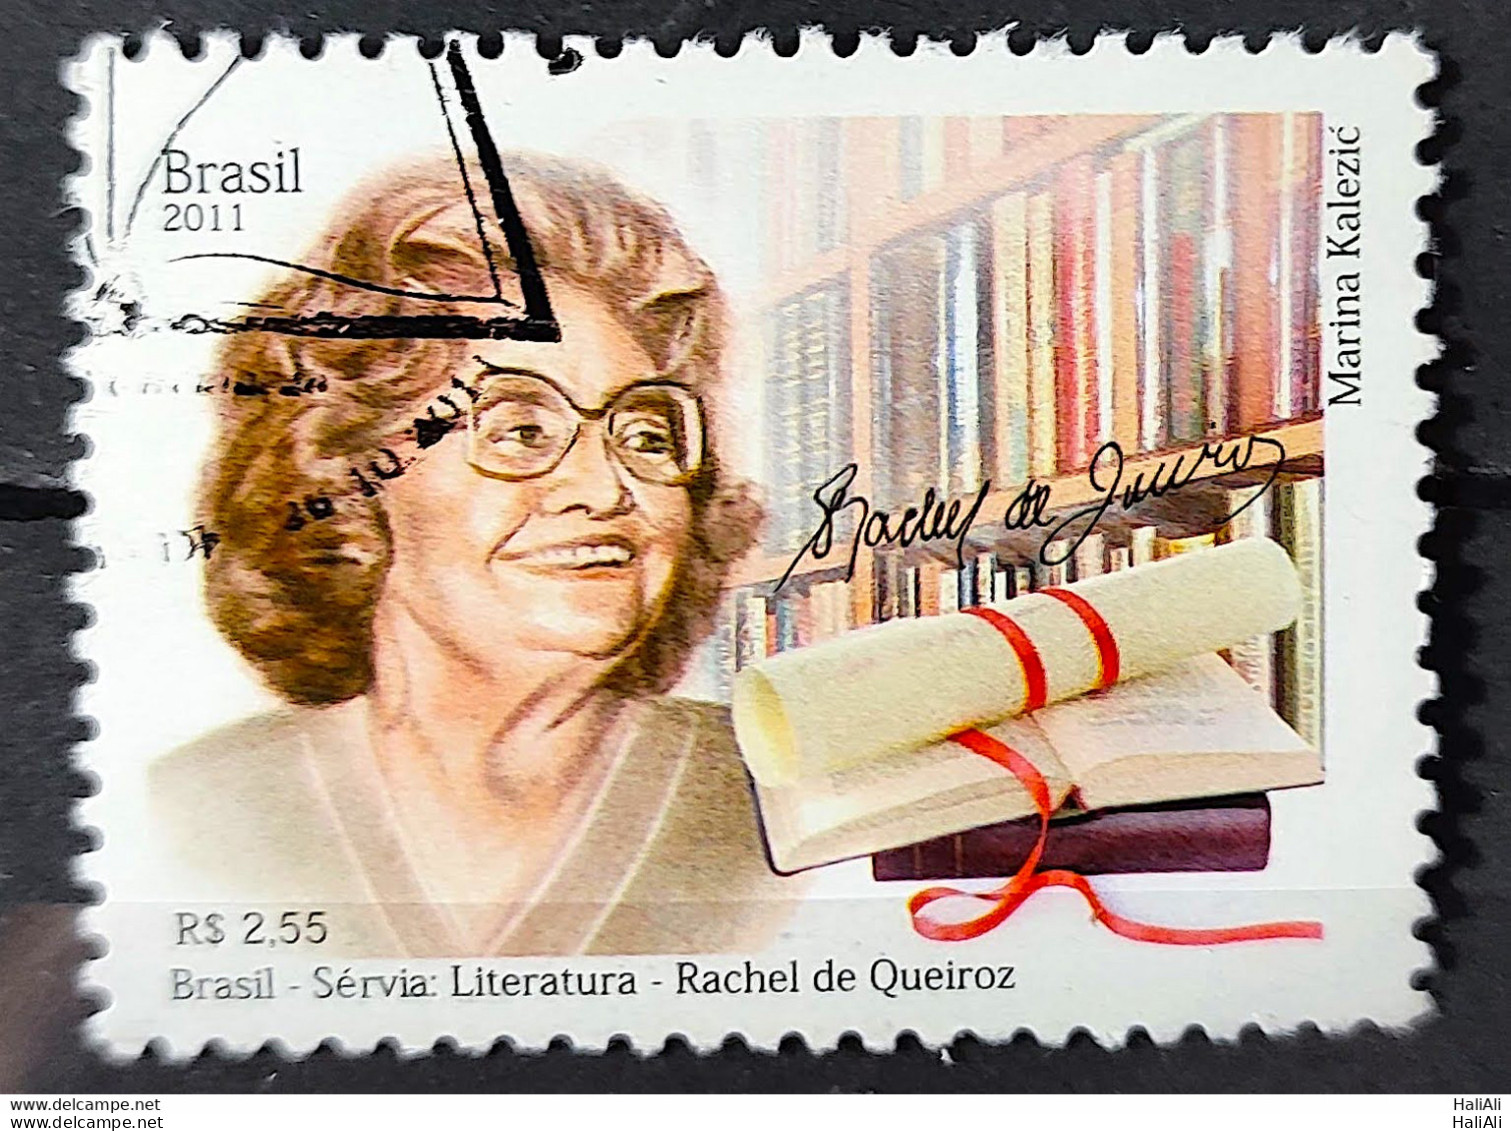 C 3149 Brazil Stamp Diplomatic Relations Servia Rachel De Queiroz Literature 2011 Circulated 1 - Usados